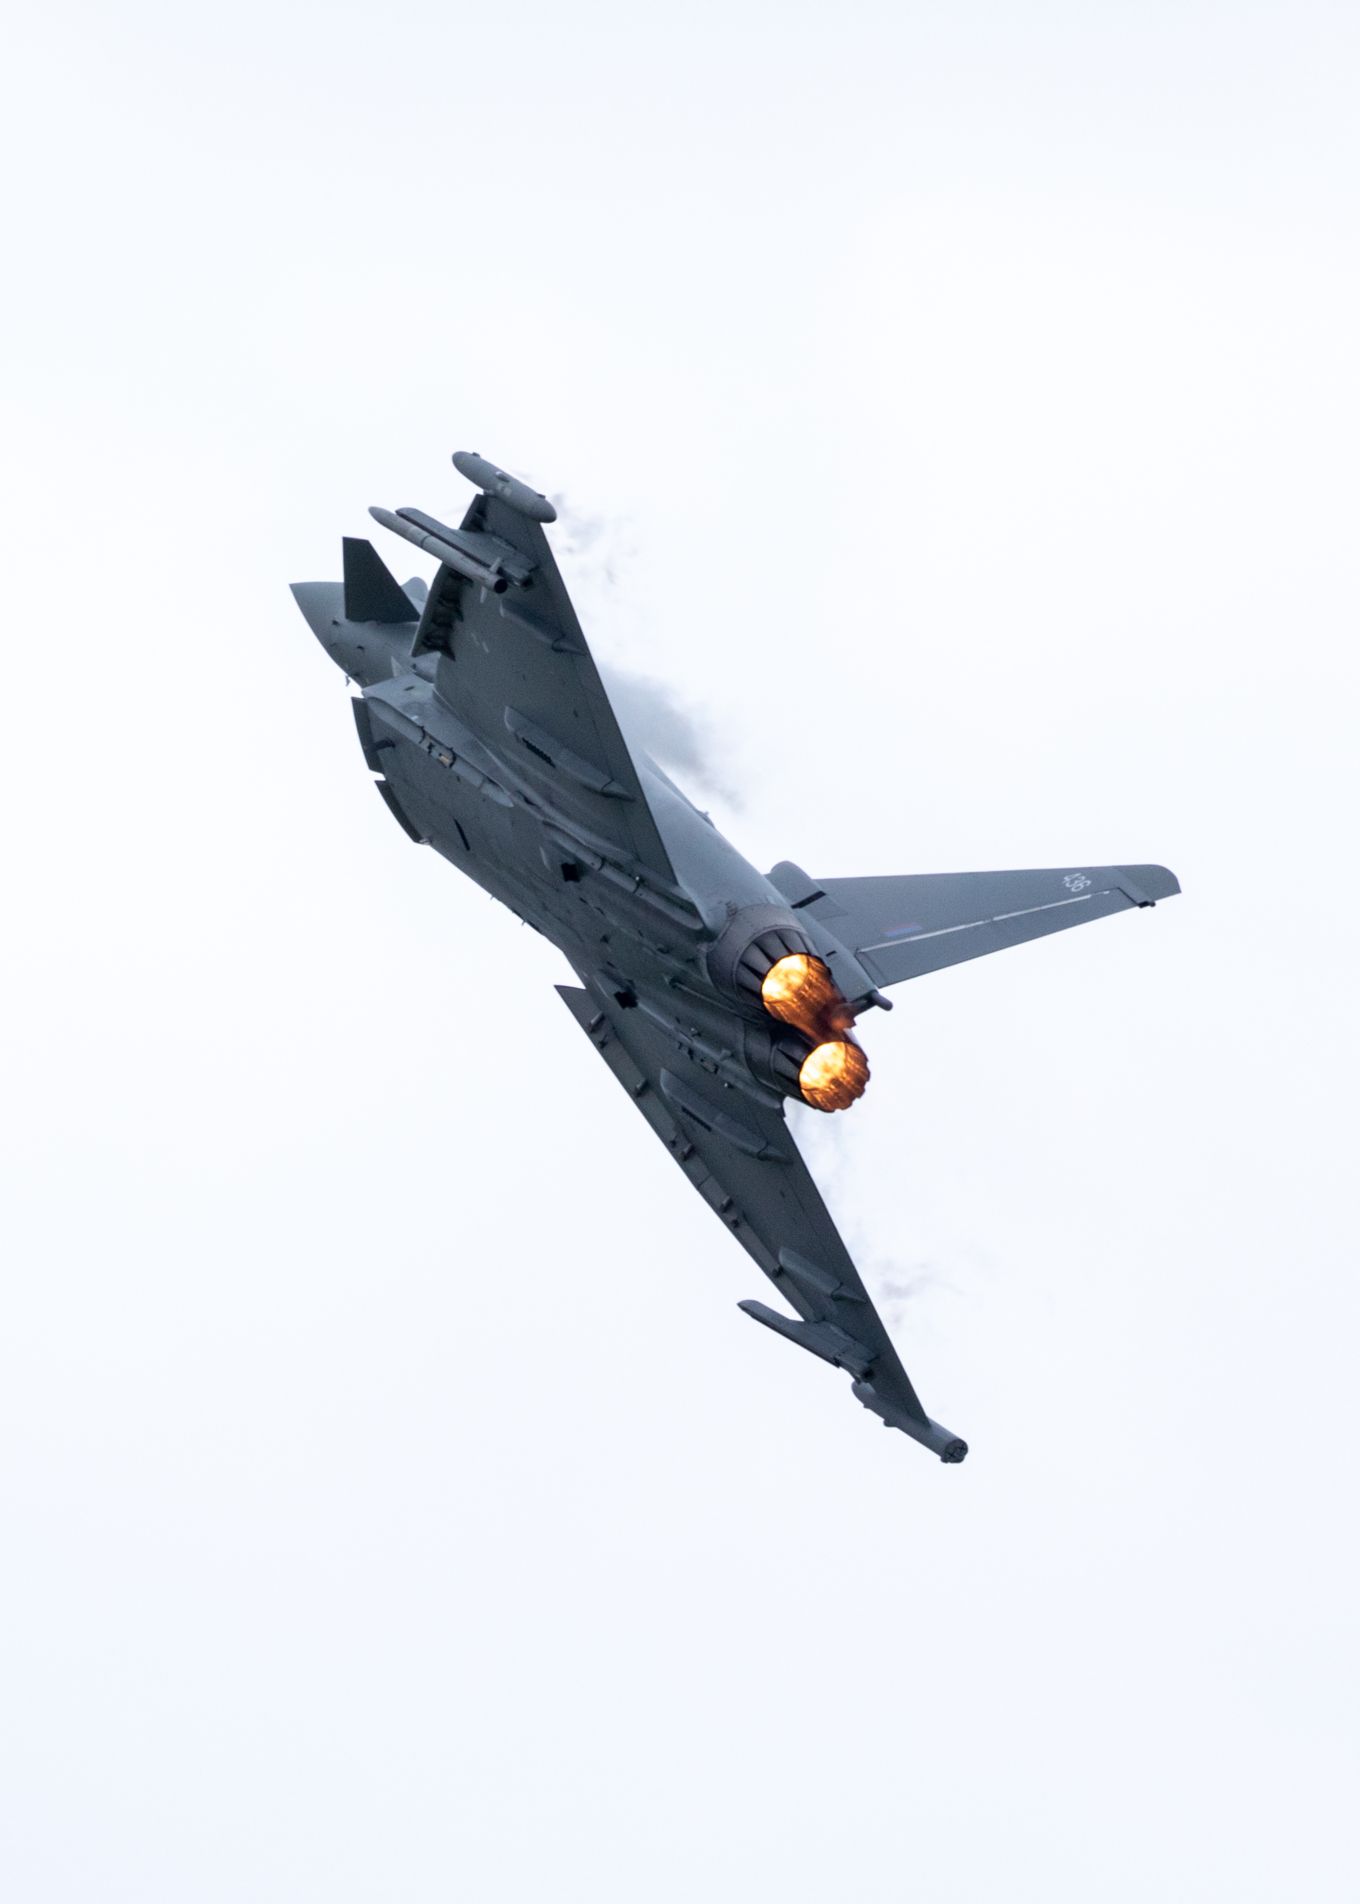 Typhoon Display team Pilot practices manoeuvres in the skies over RAF Honington